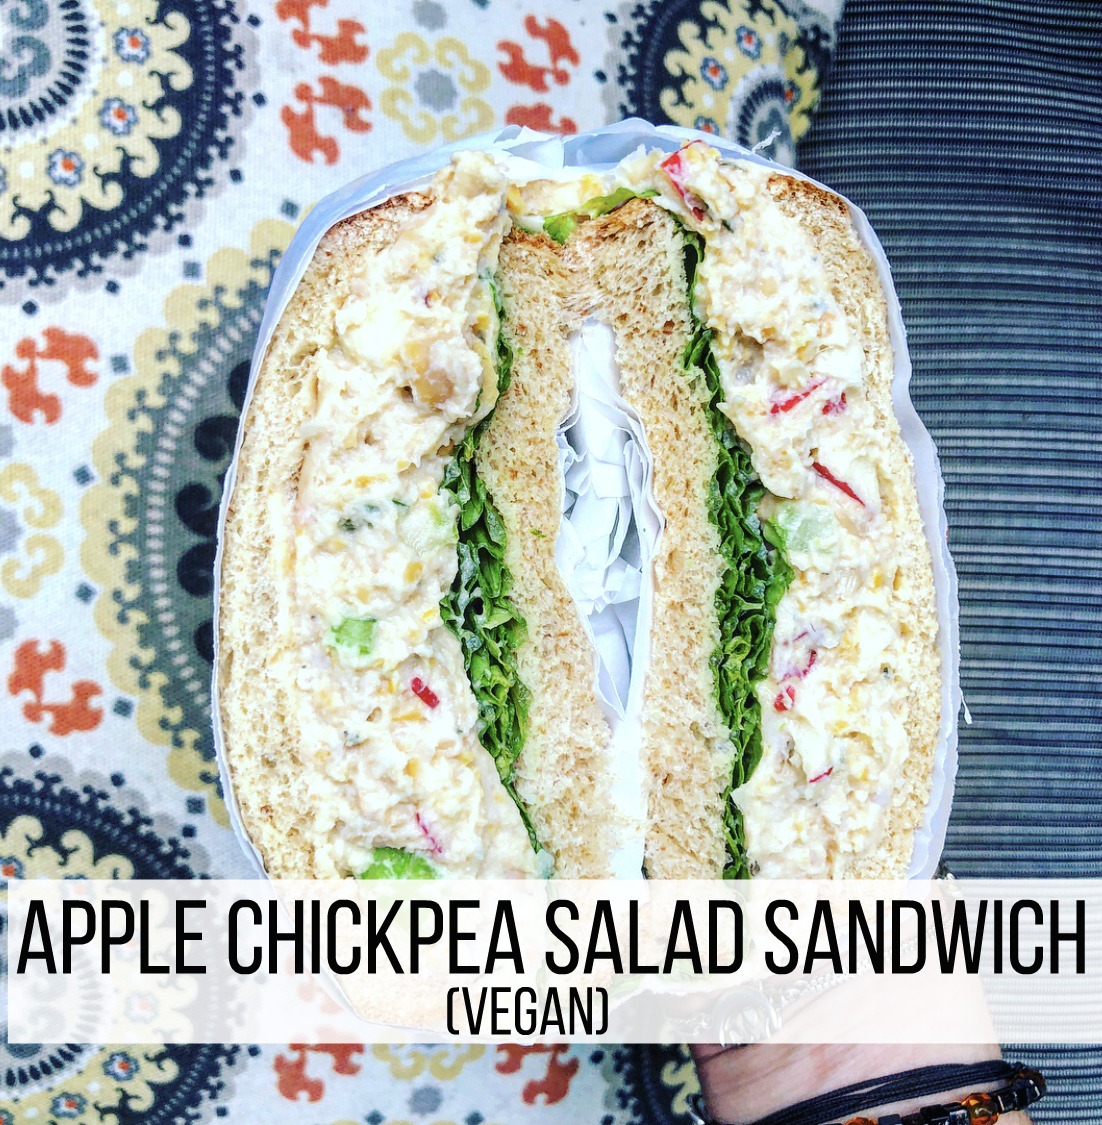 Apple Chickpea Salad Sandwich Vegan